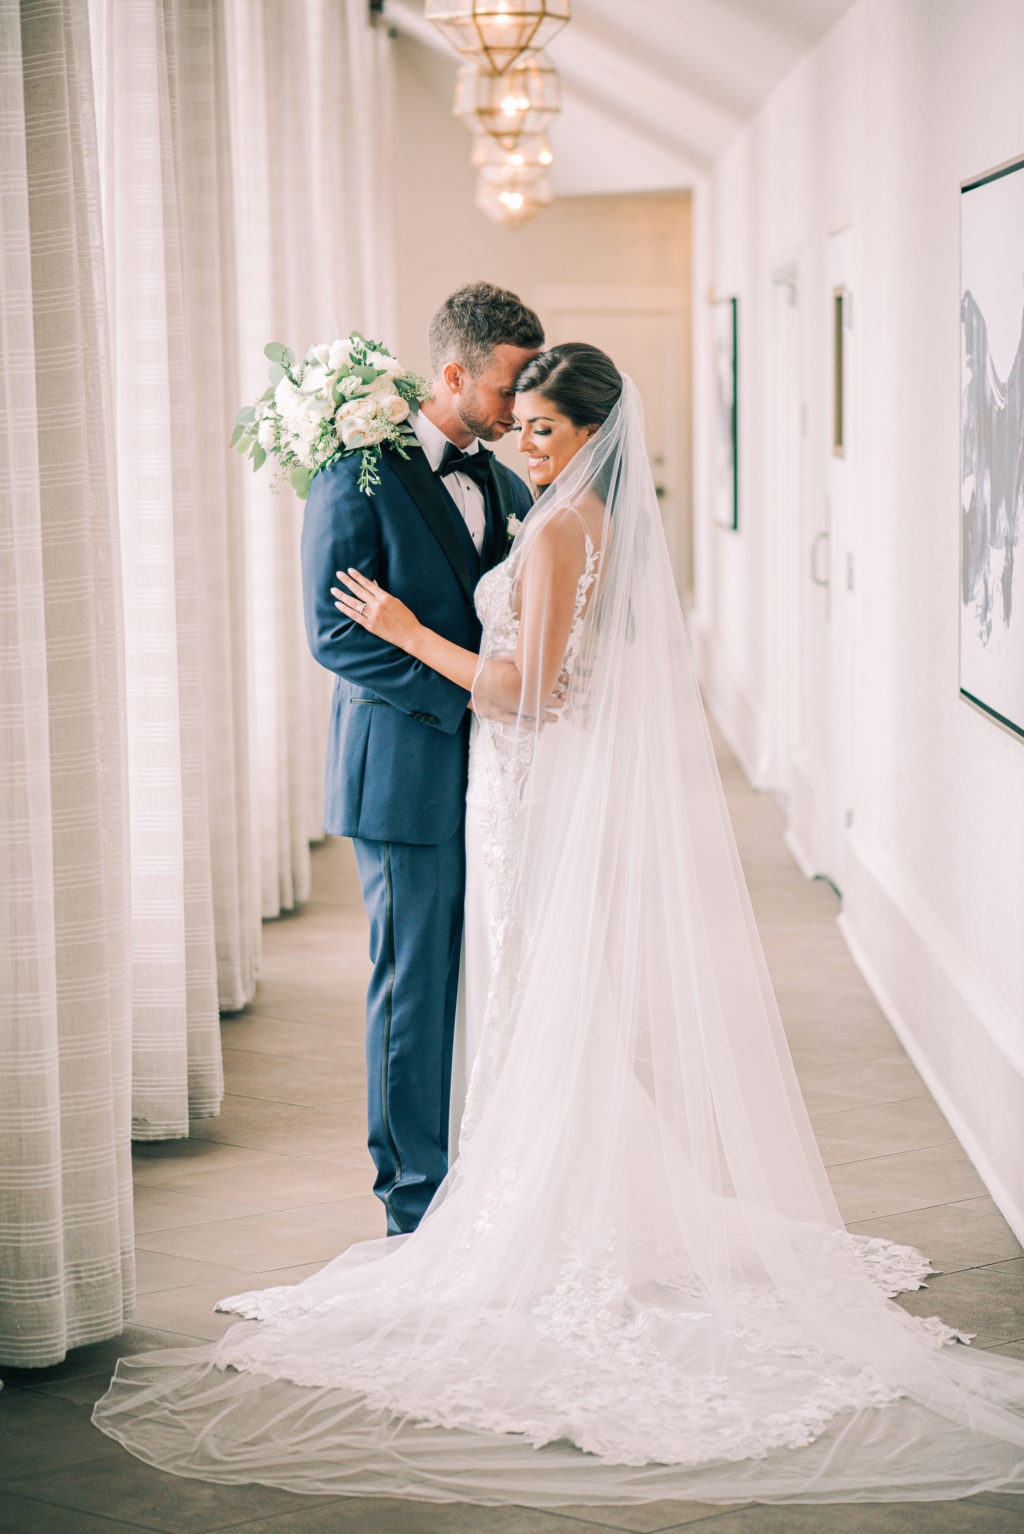 Iyrus Weddings | Tampa Bay Photography and Videography Team